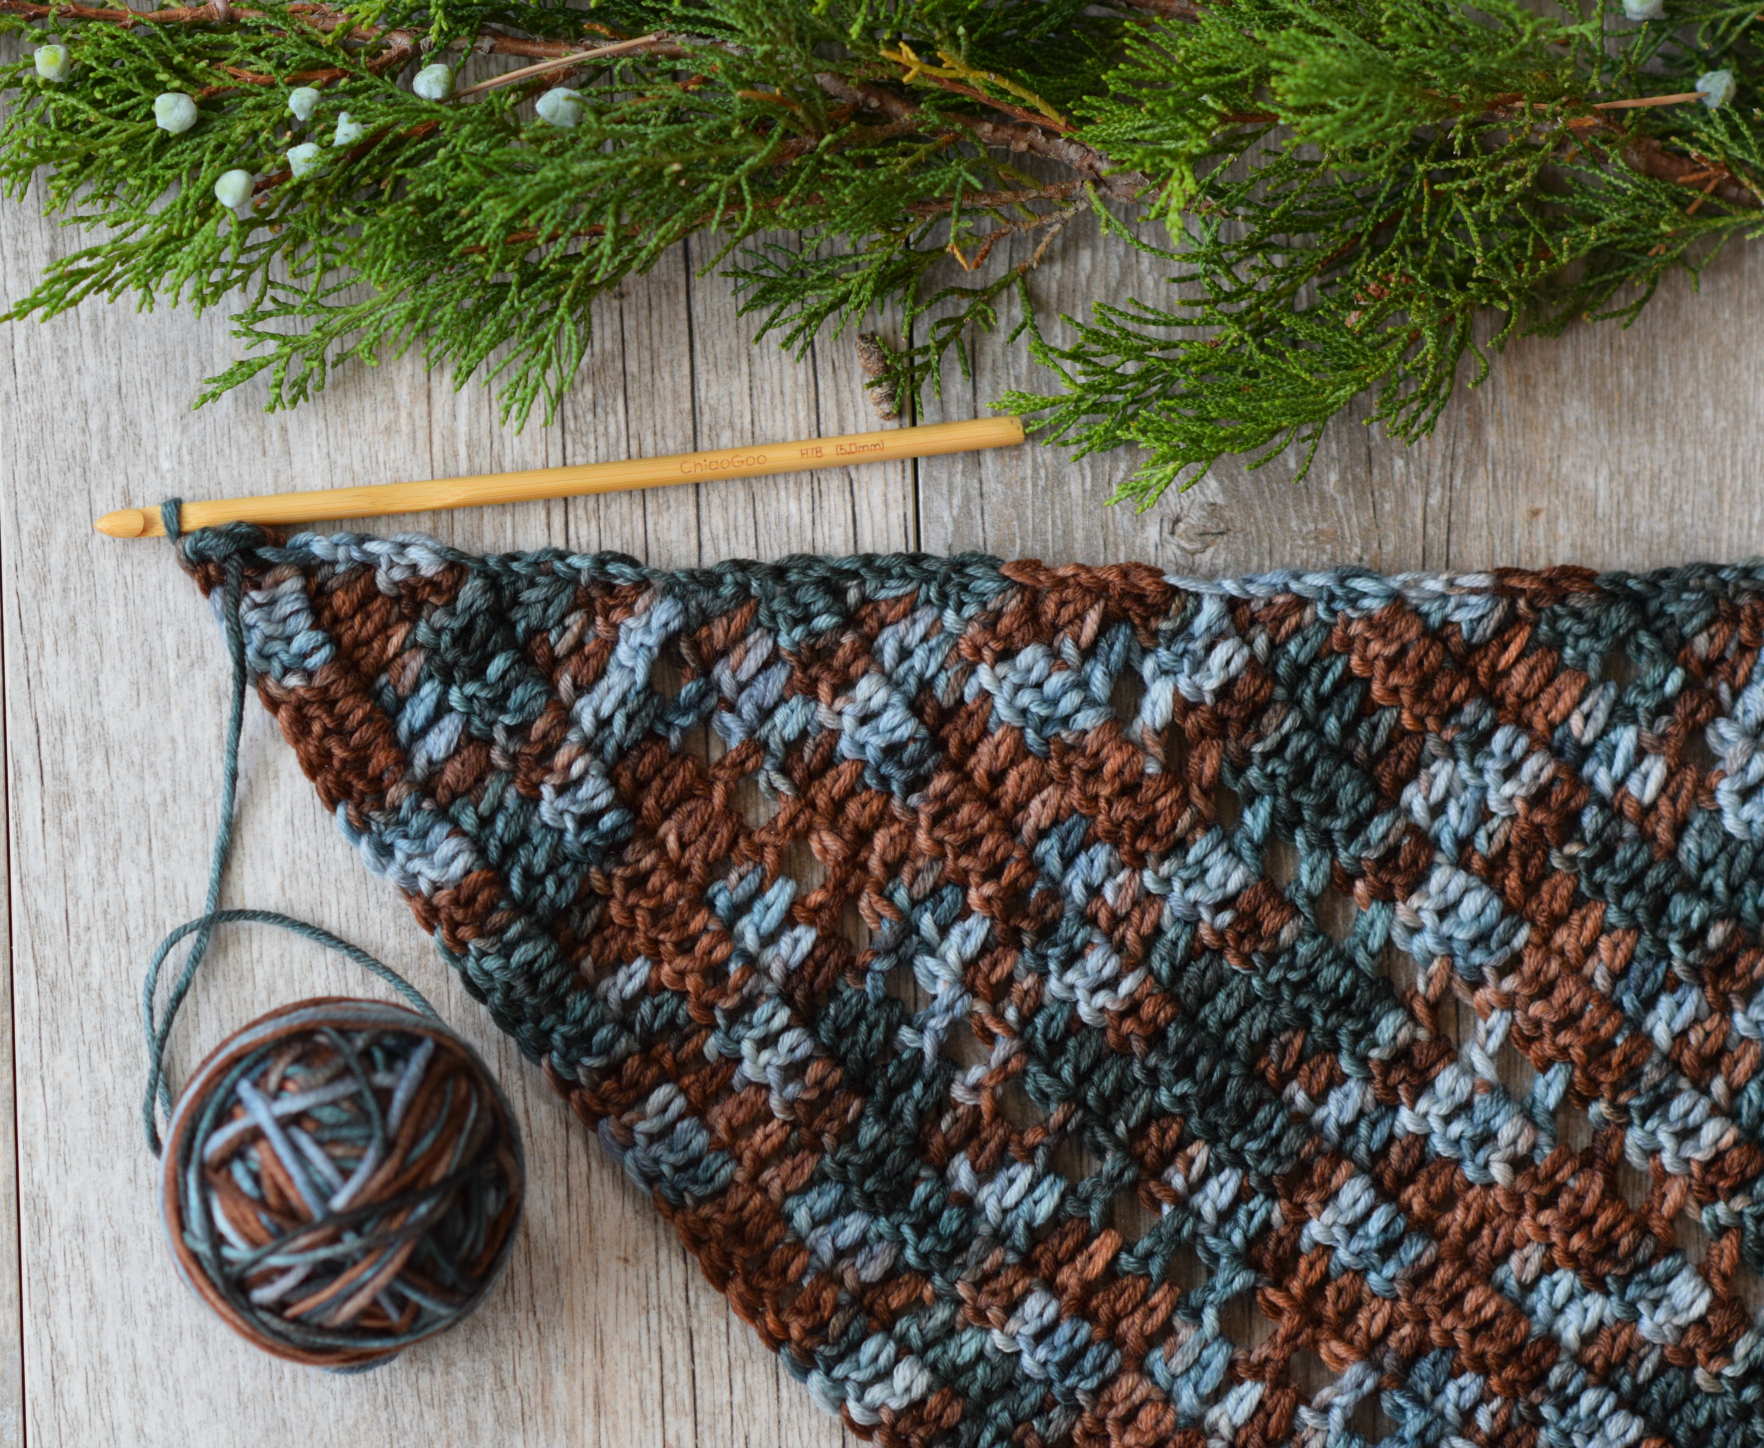 Sale New 1Cone 500g Polyester Sequin Hand Knitting Wrap Scarfs Crochet Yarn 23 